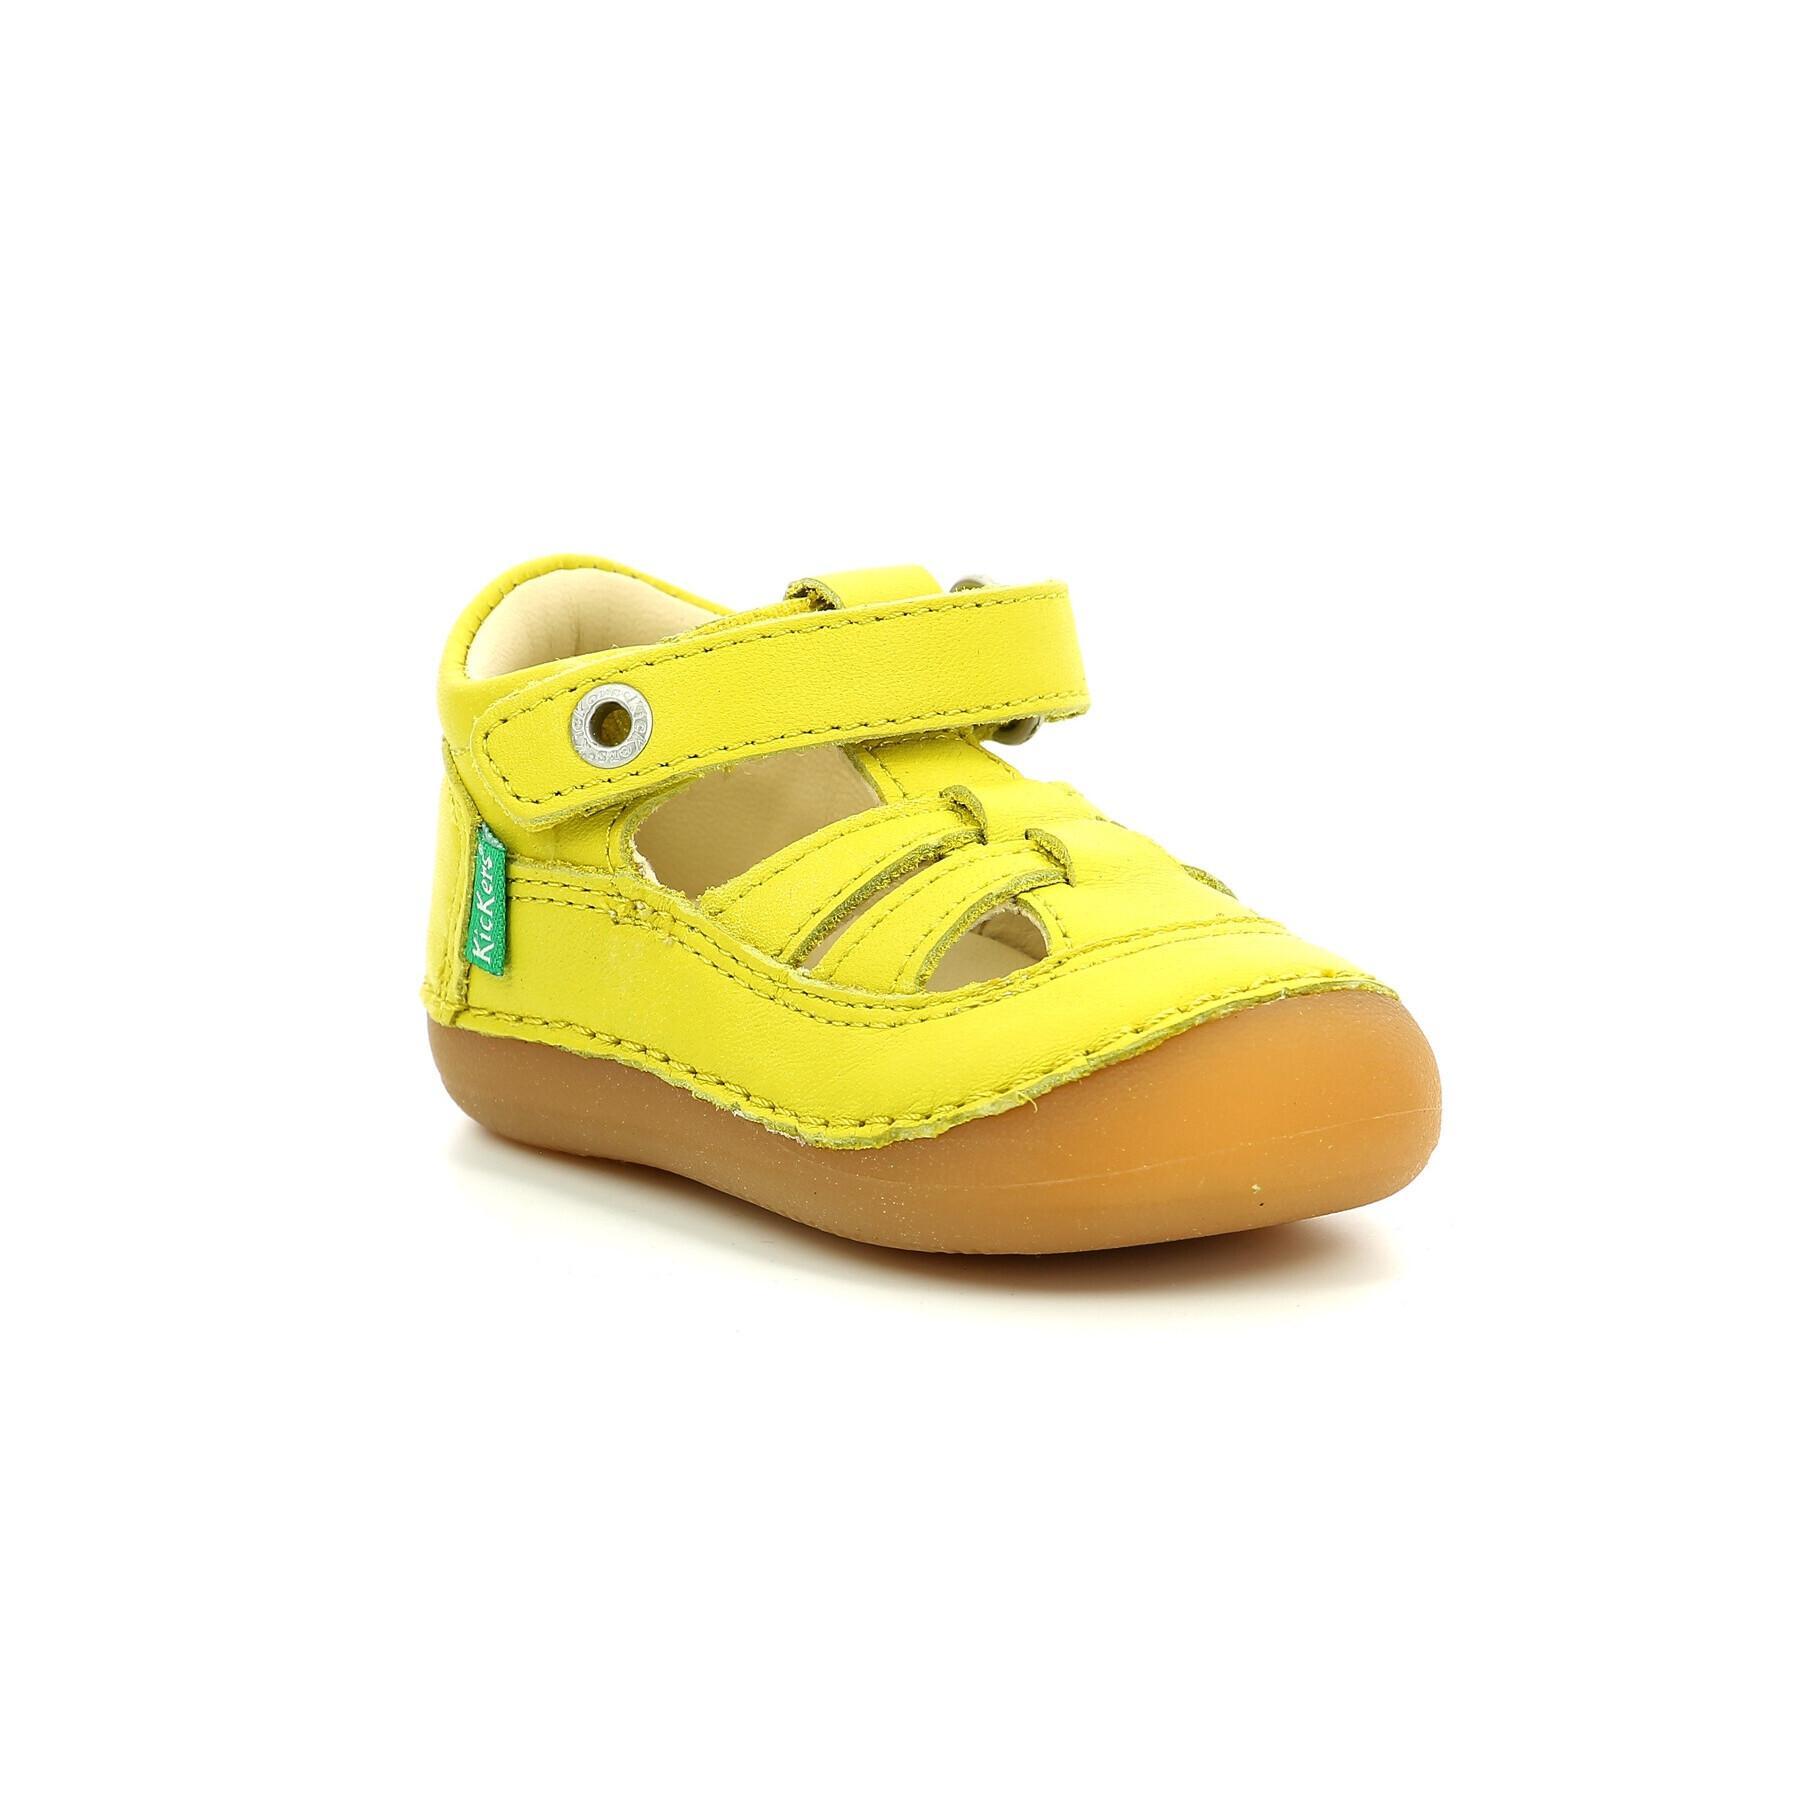 Sandálias para bebés Kickers Sushy